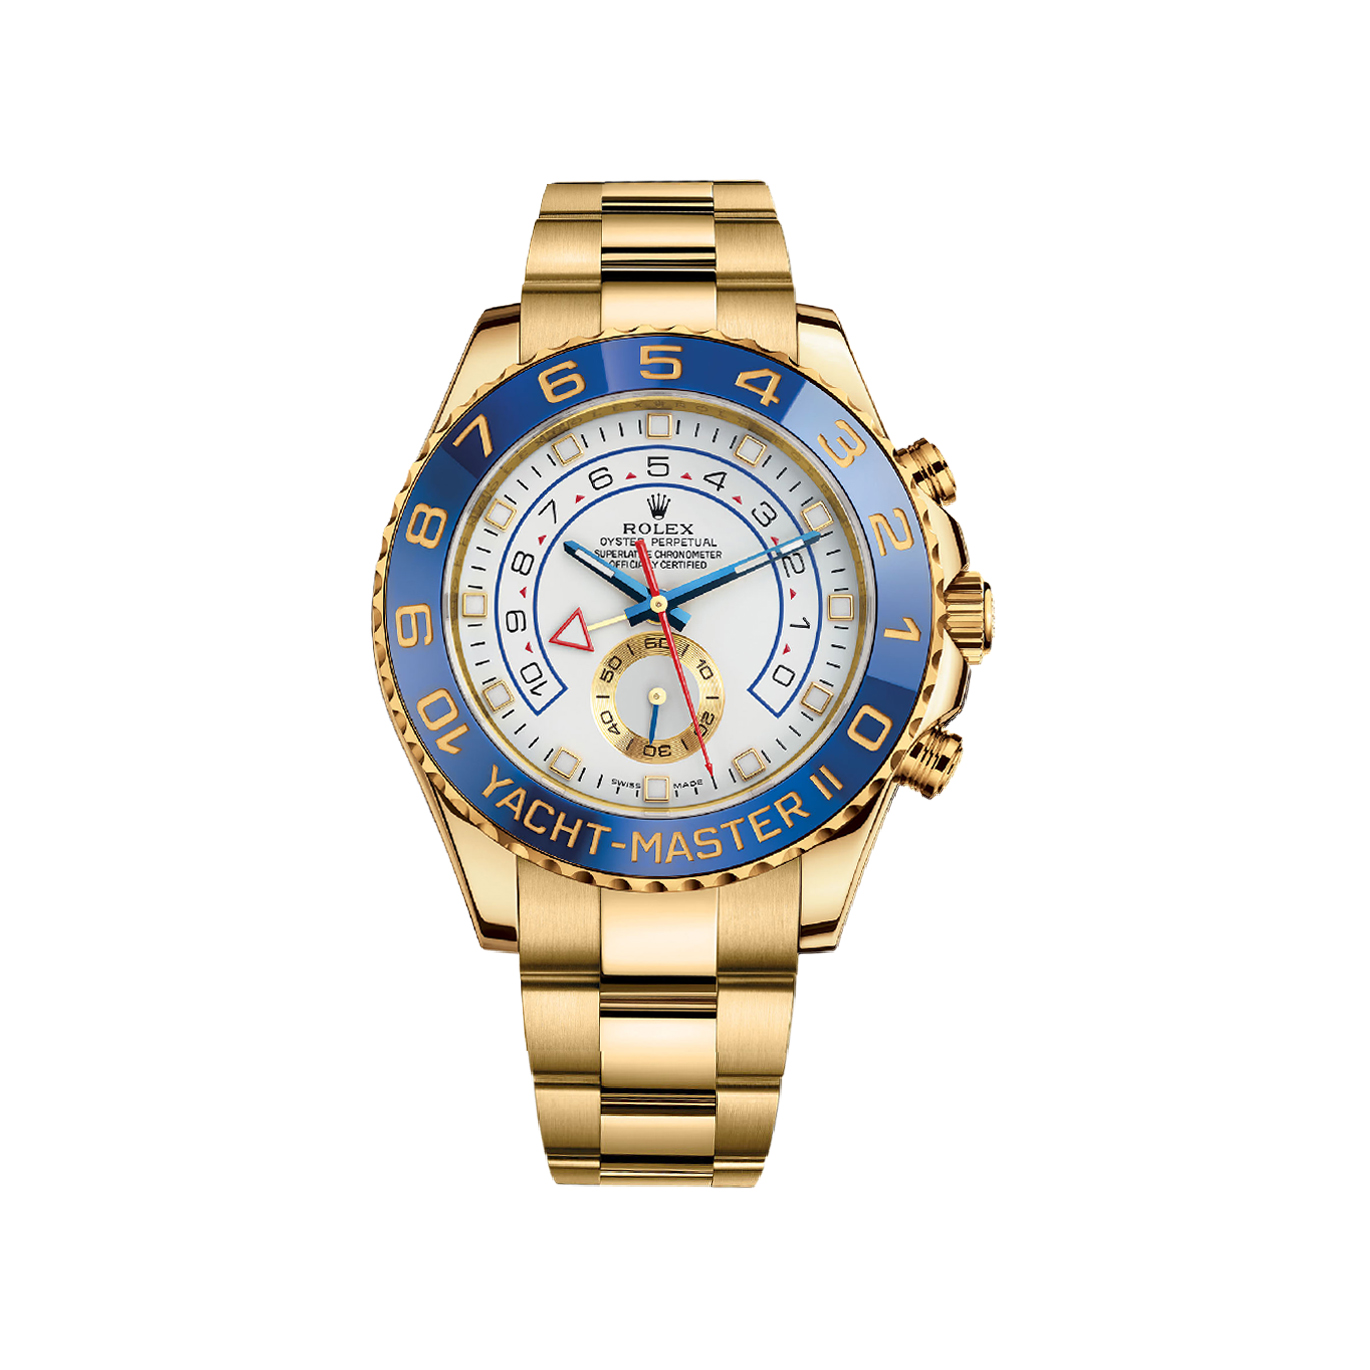 Yacht-Master II 116688 Gold Watch (White)